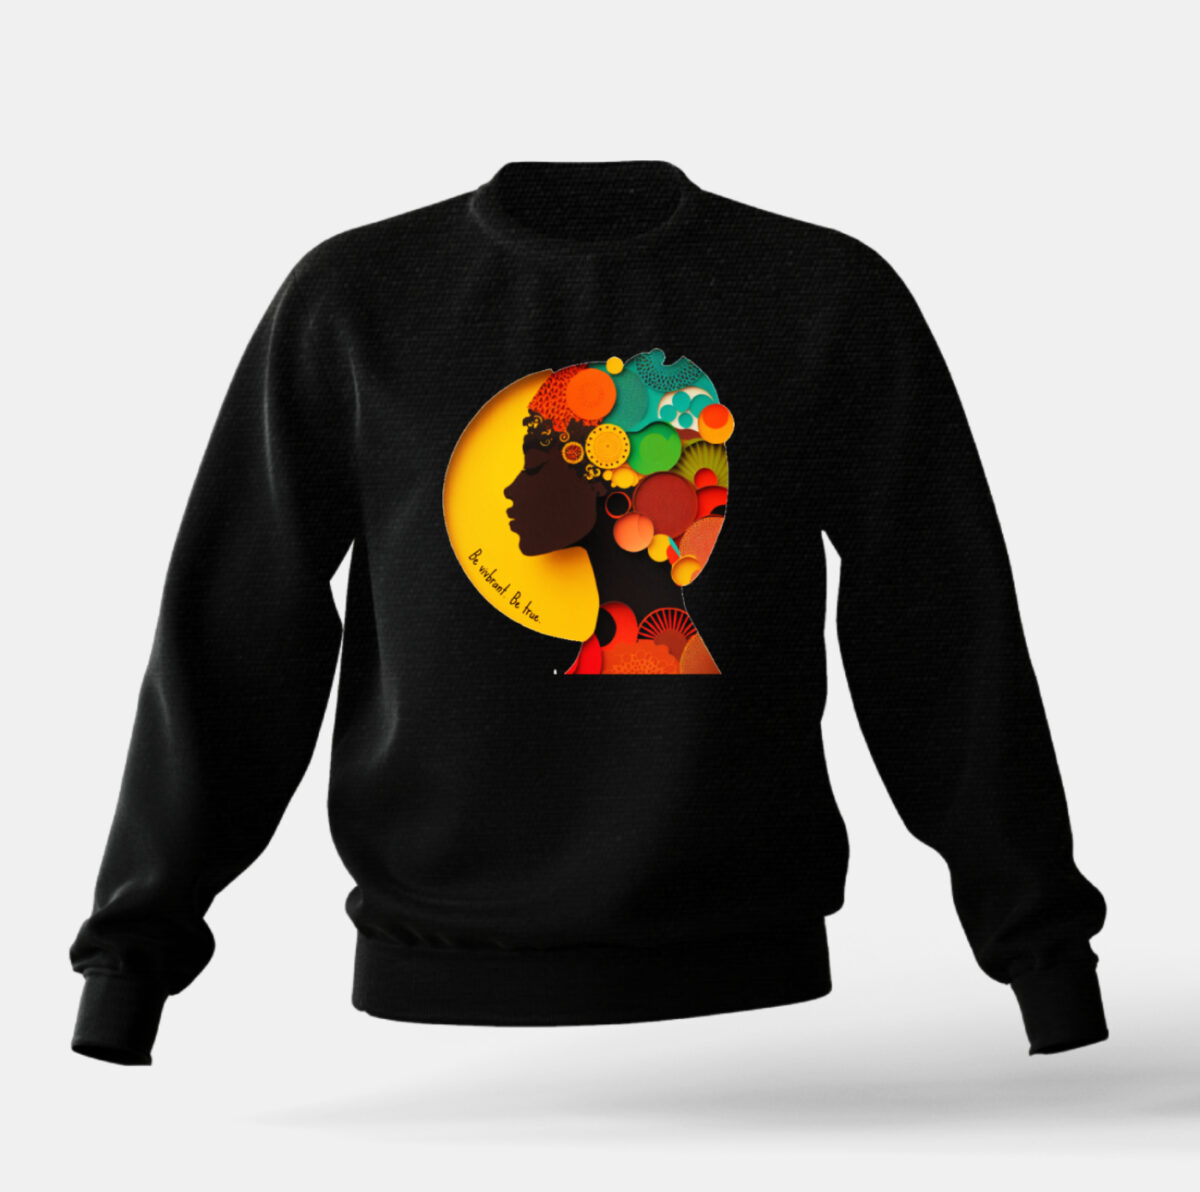 Crewneck Graphic Sweatshirt: Be Vibrant. Be True